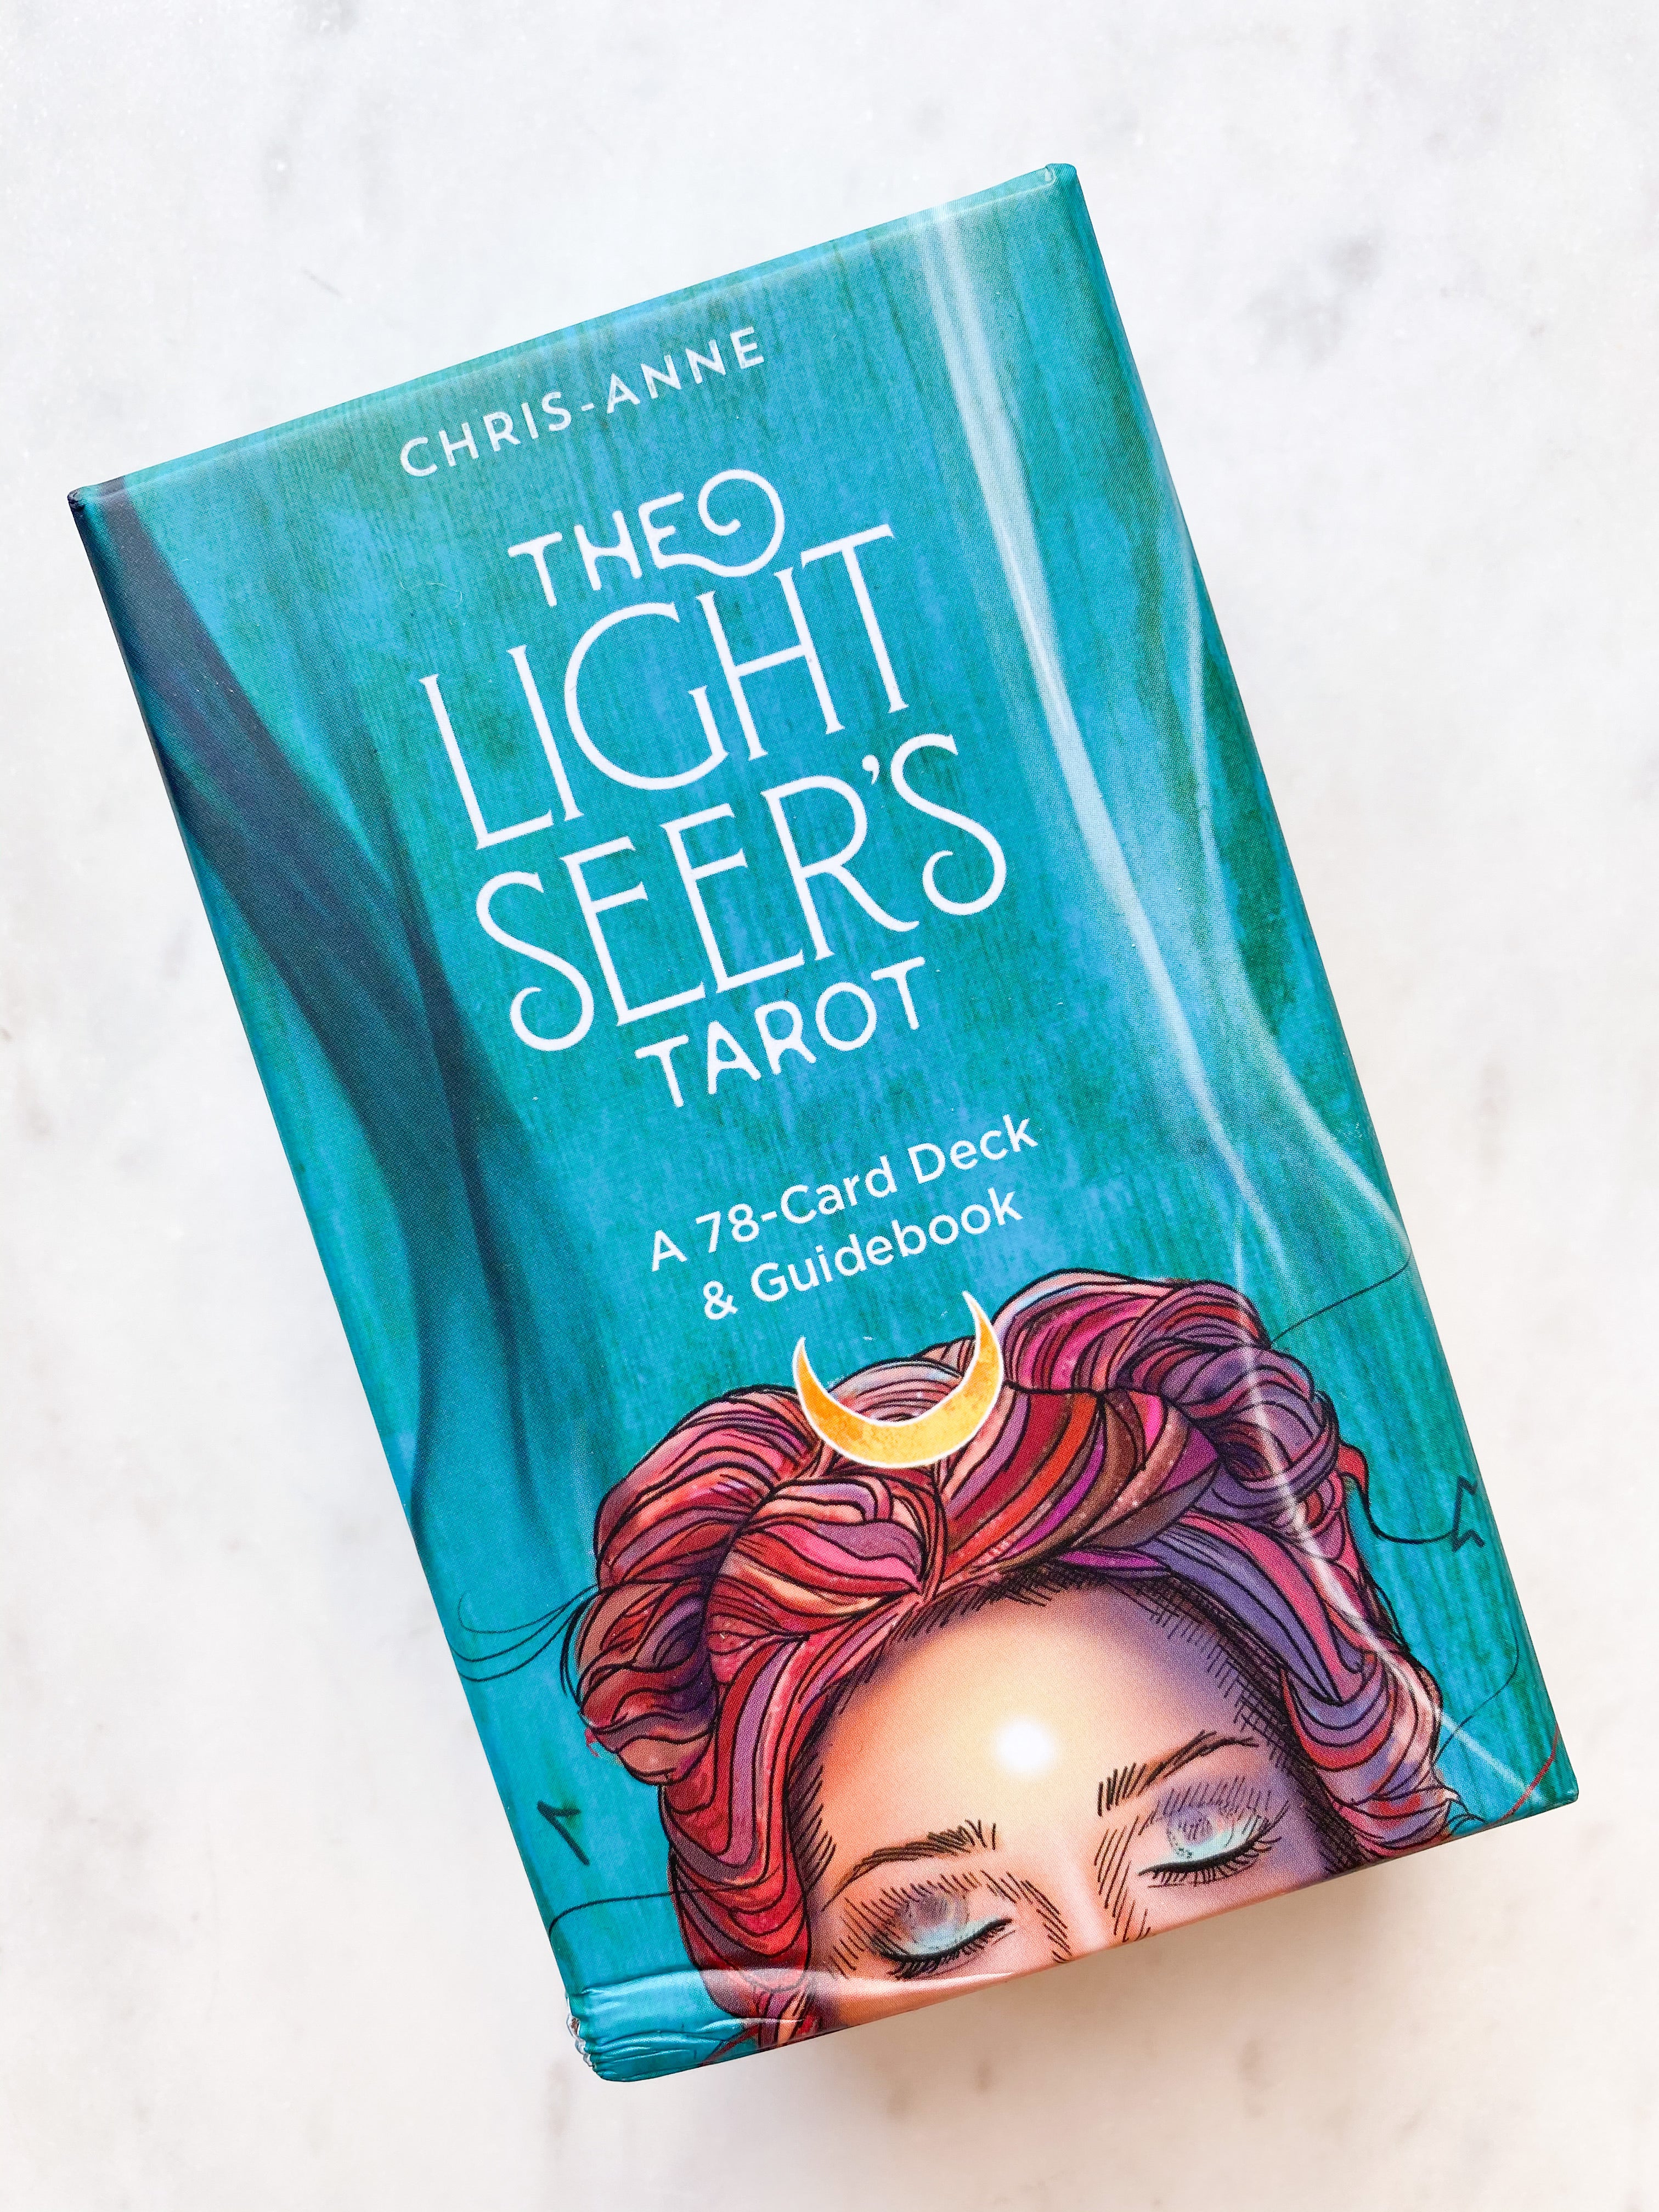 The Light Seer’s Tarot - Chris-Anne